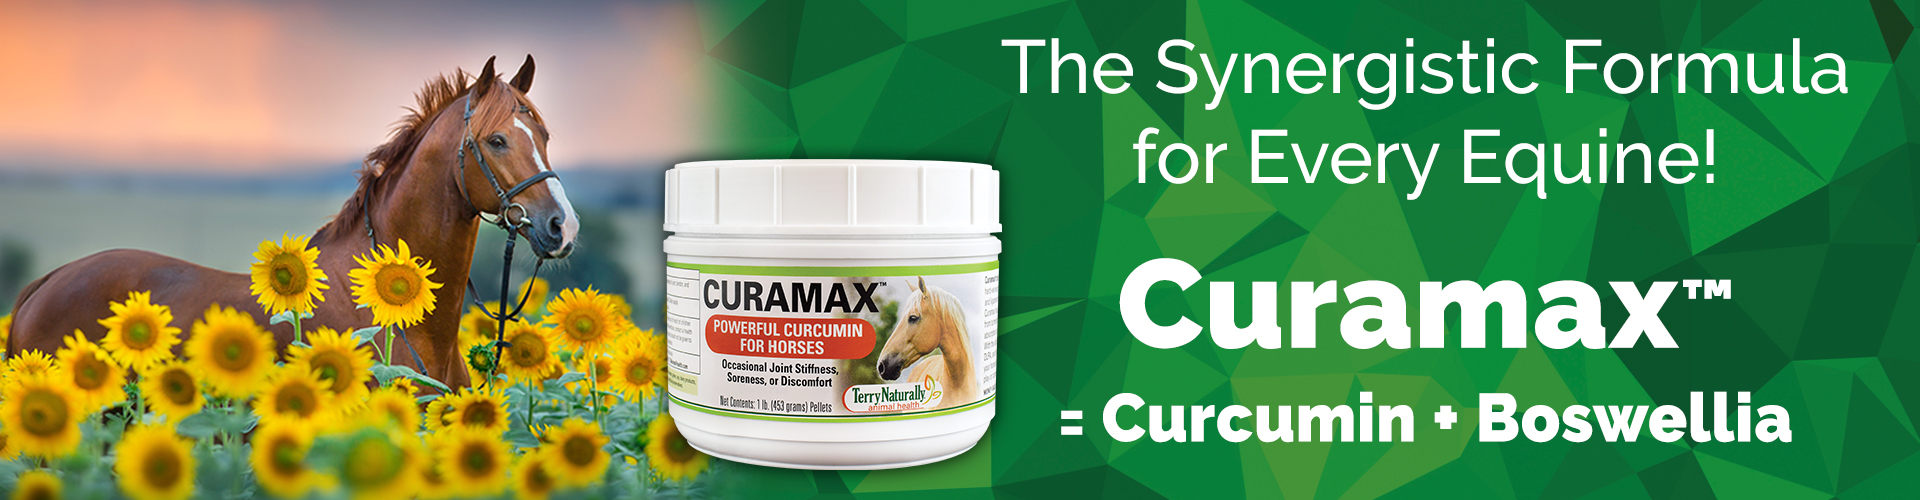 The Synergistic Formula for Every Equine! CURAMAX™ = Curcumin + Boswellia